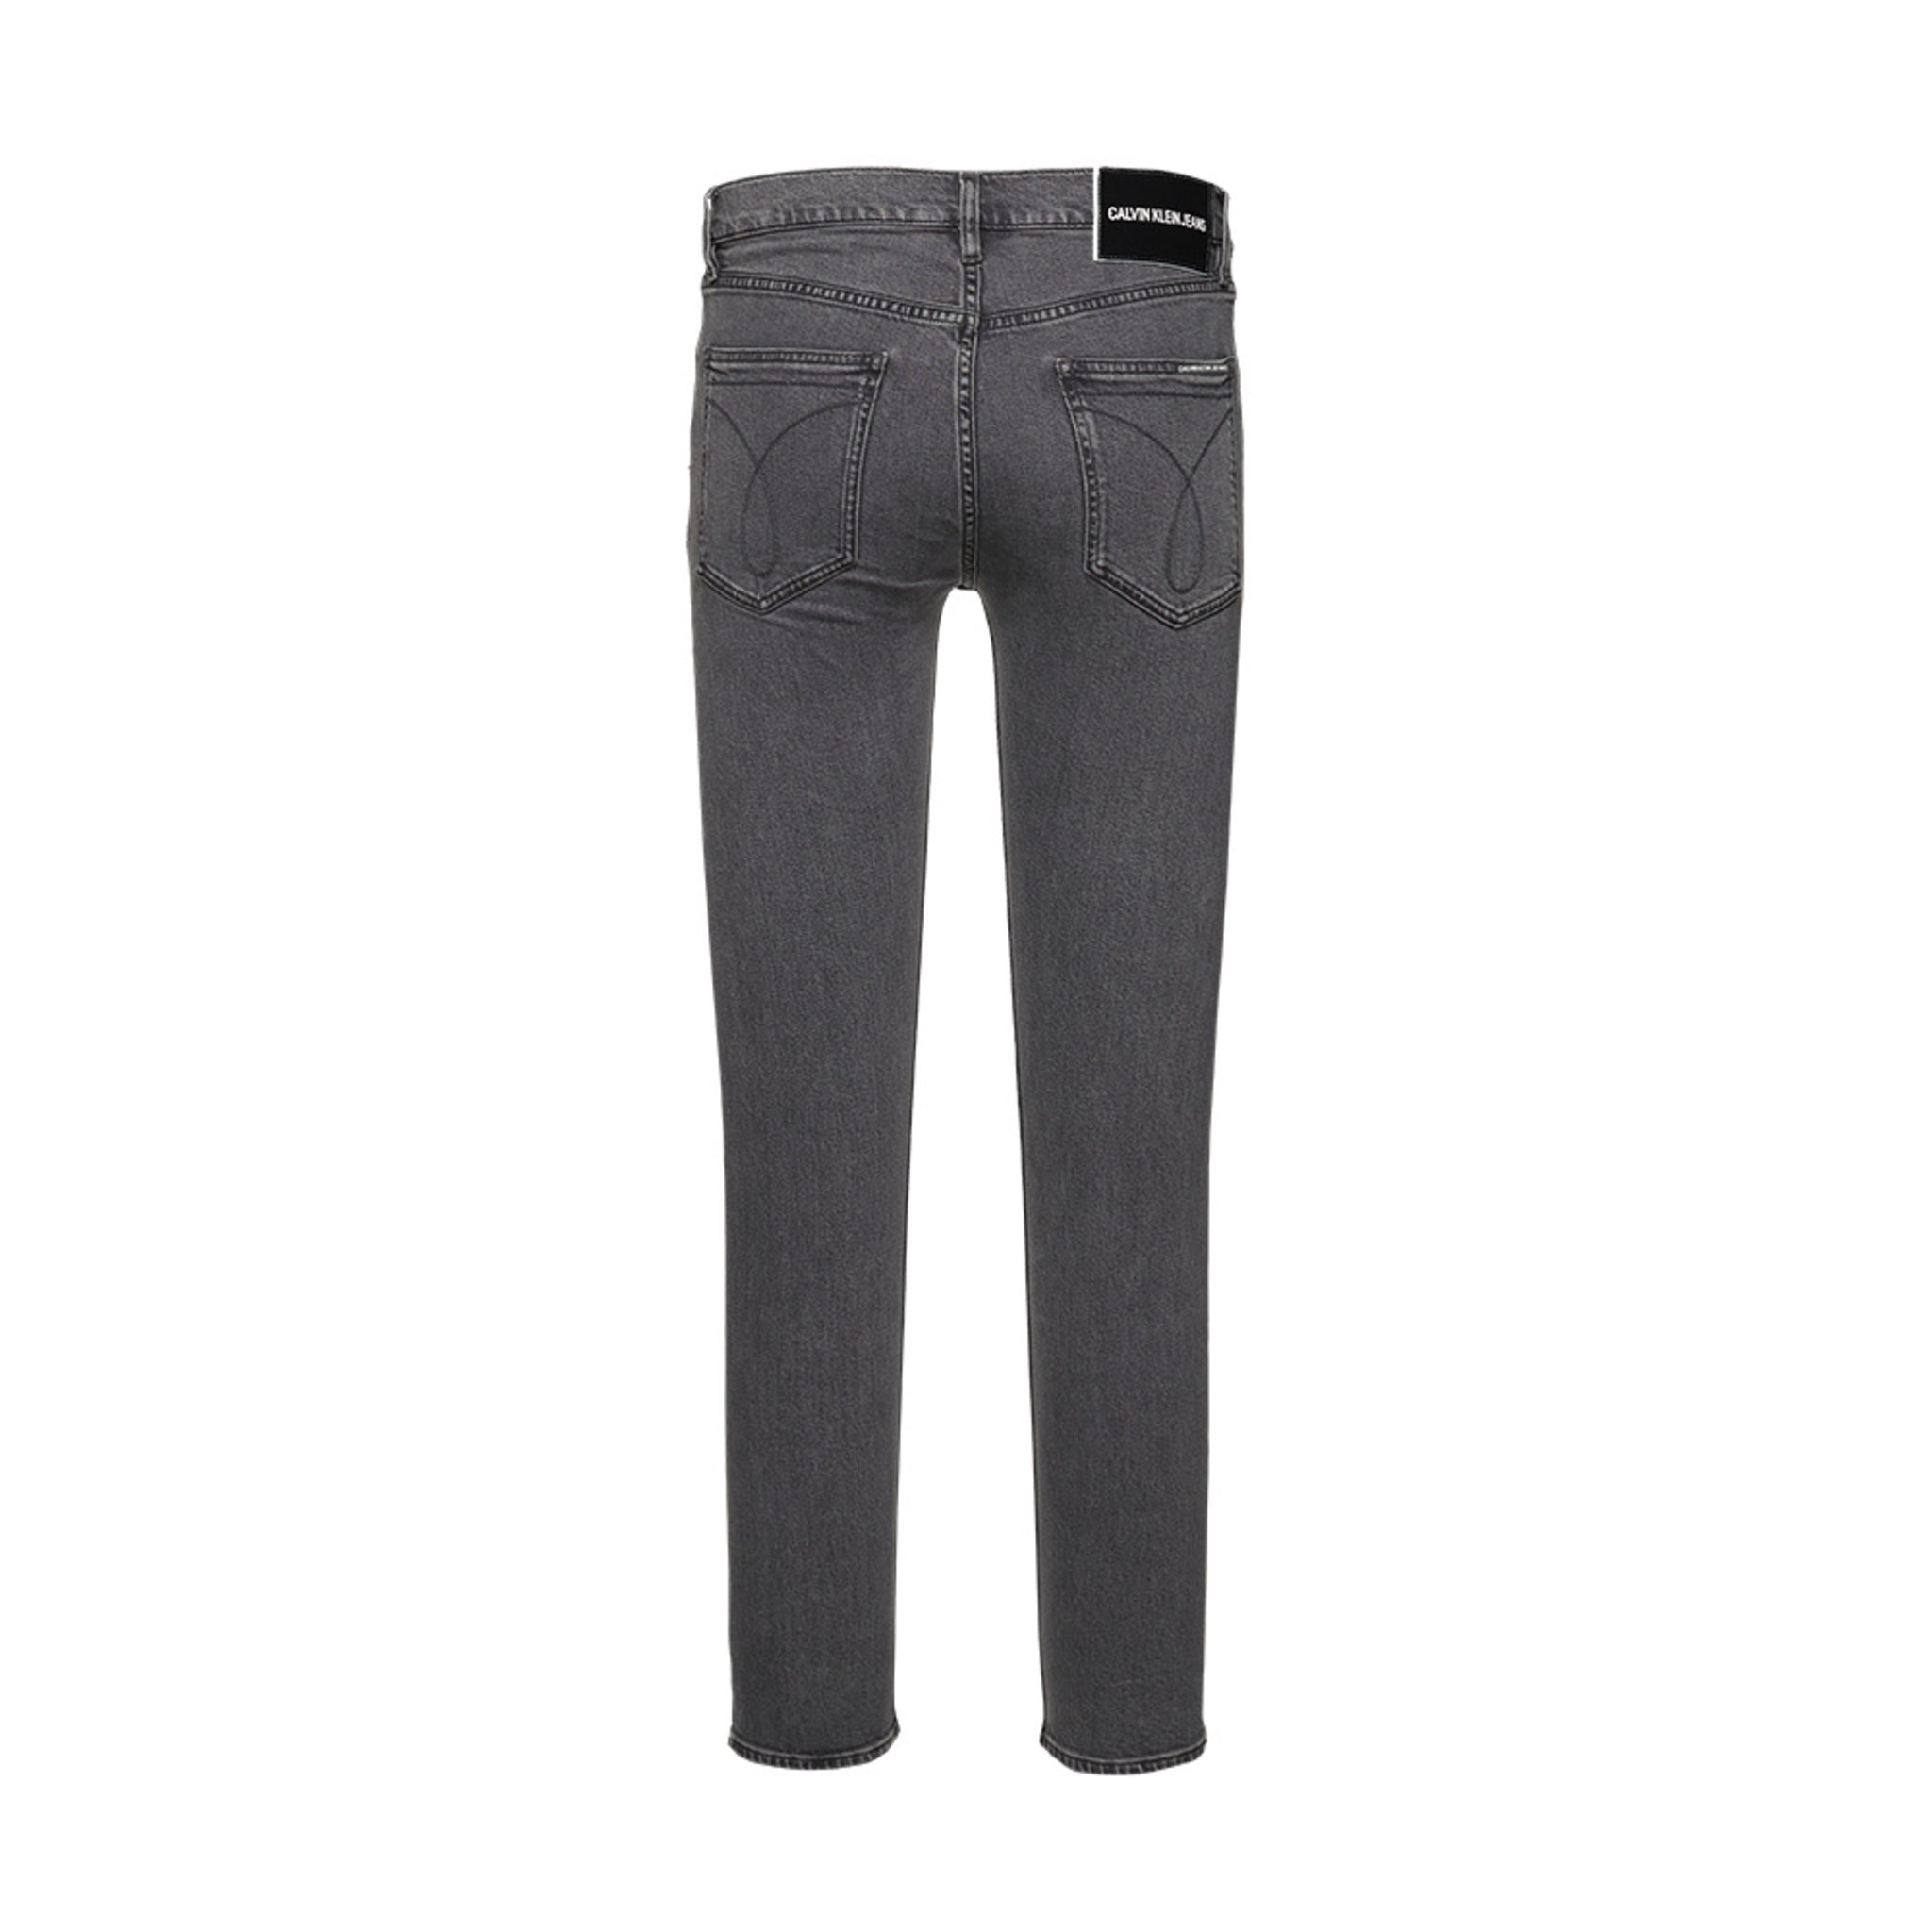 CKJ 016 Skinny Jeans, Grey